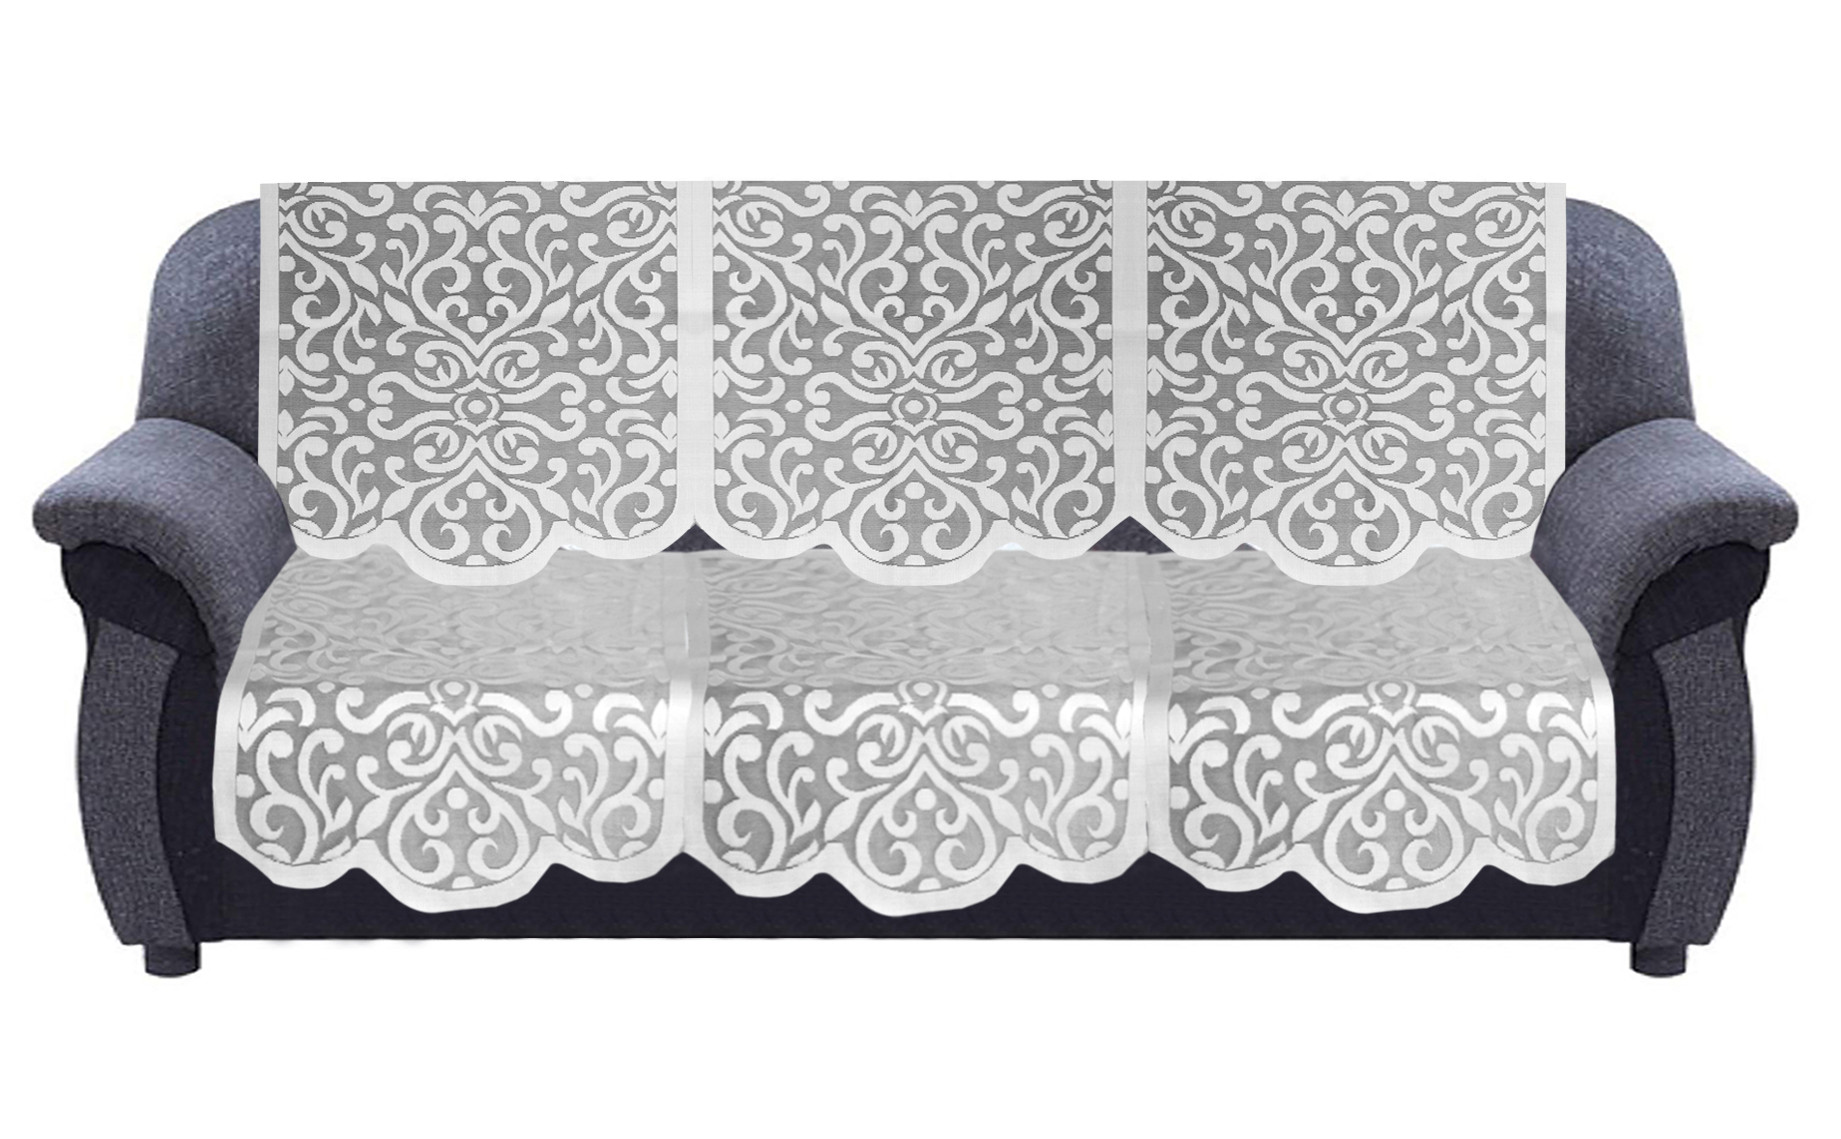 Kuber Industries Artcam Design 5 Seater Cotton Sofa Cover Set (White)